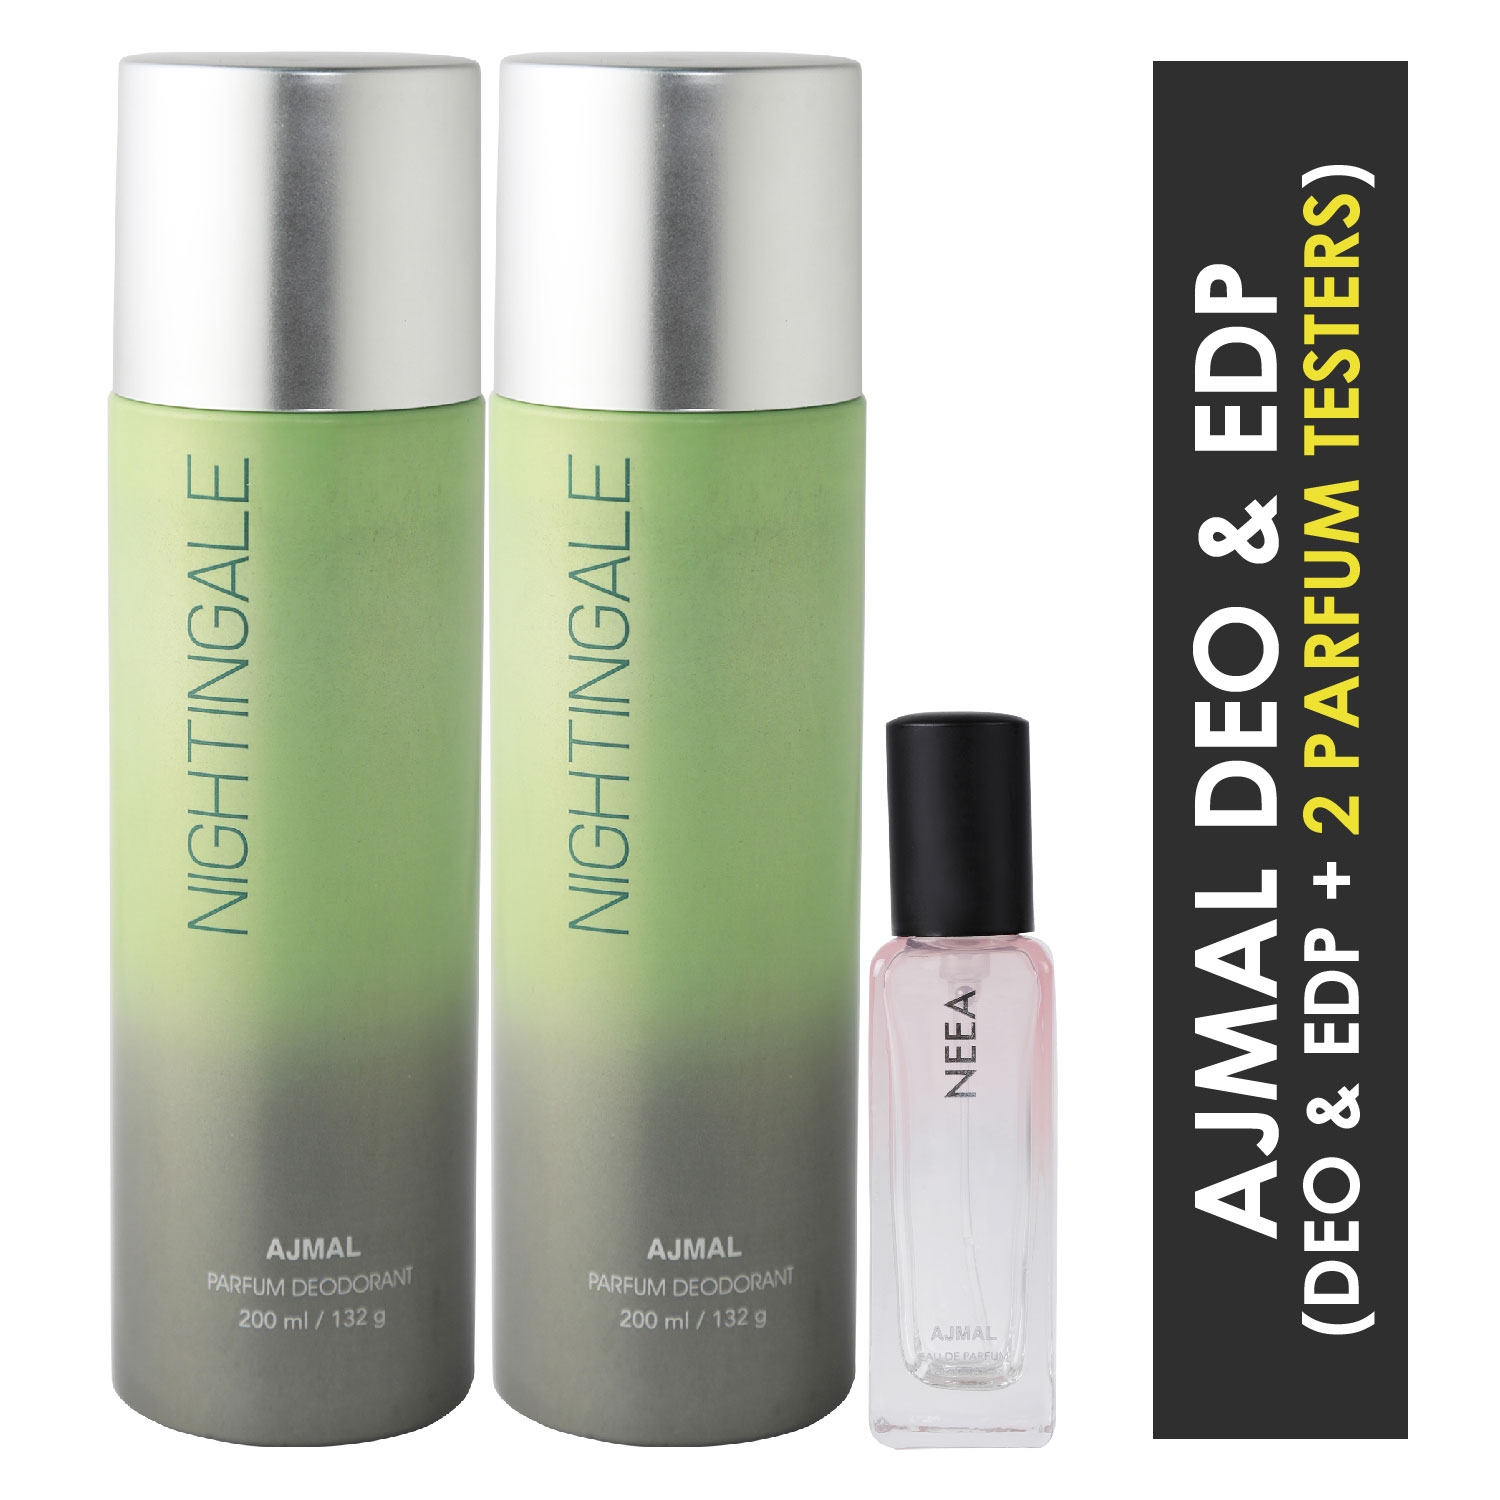 Ajmal | Ajmal 2 Nightingale Deo each 200ML & Neea EDP 20ML Pack of 3 (Total 420ML) for Men & Women + 2 Parfum Testers